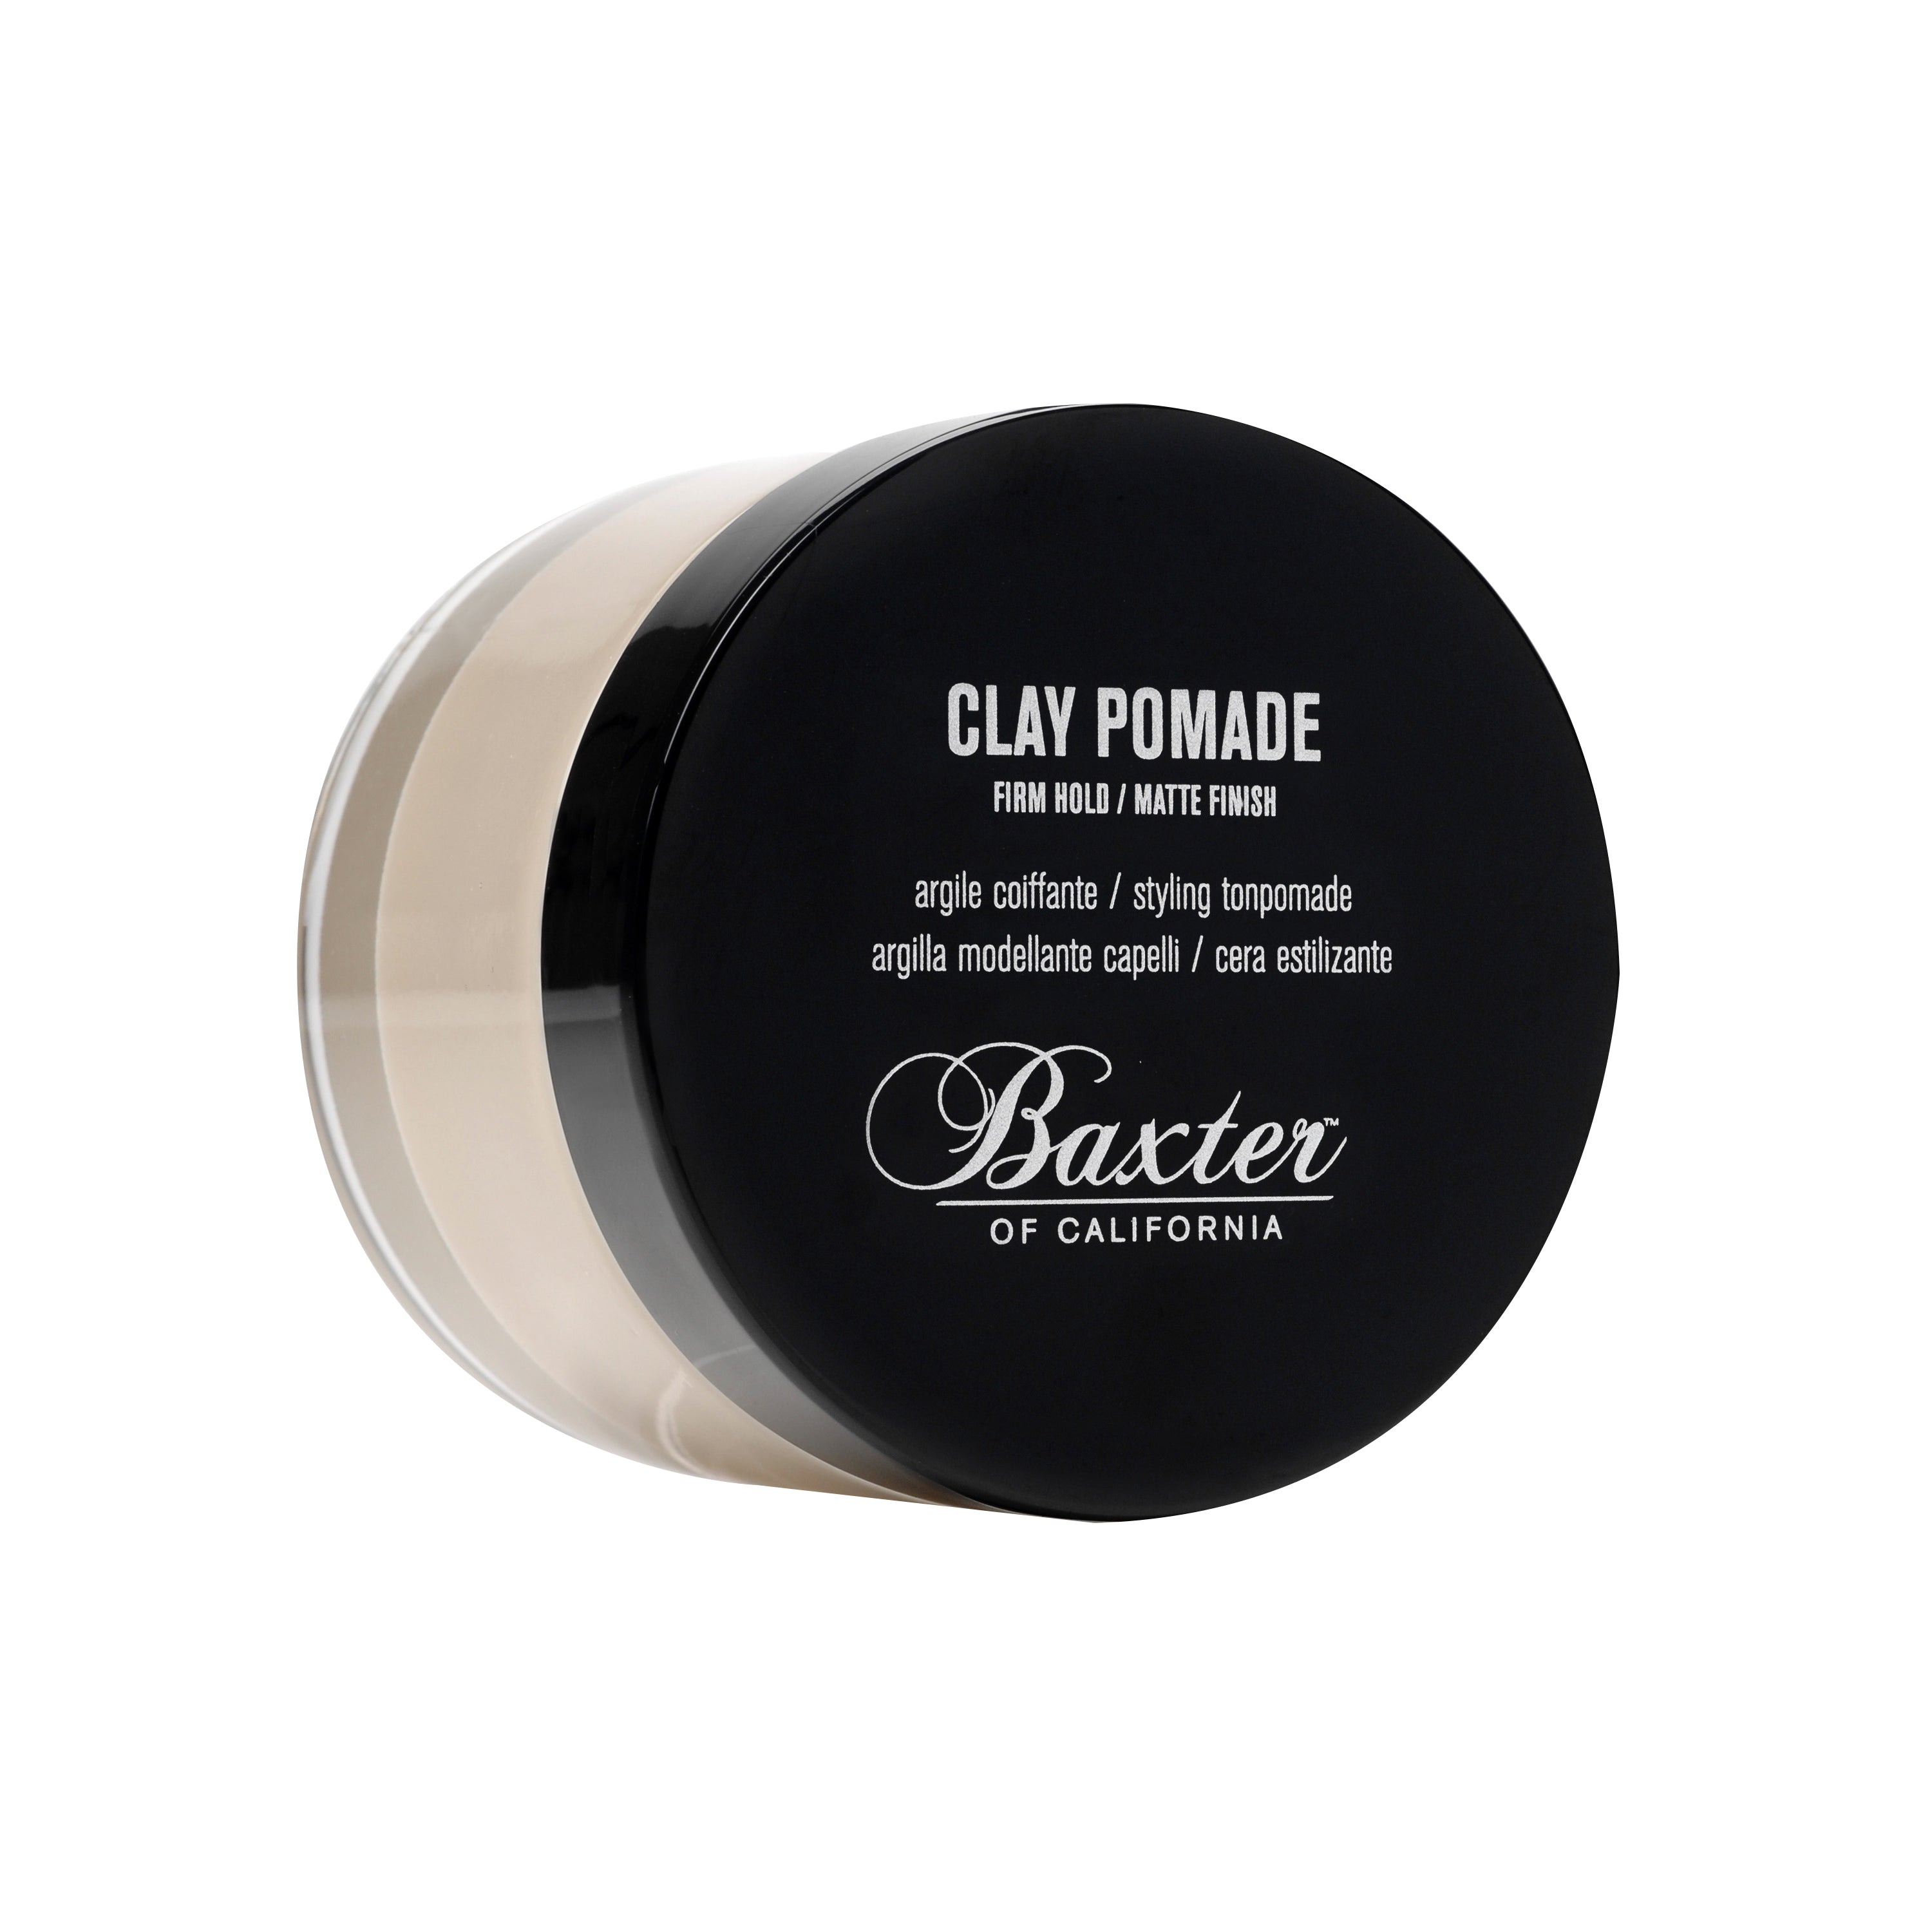 Beeswax Texturizing Hair Clay